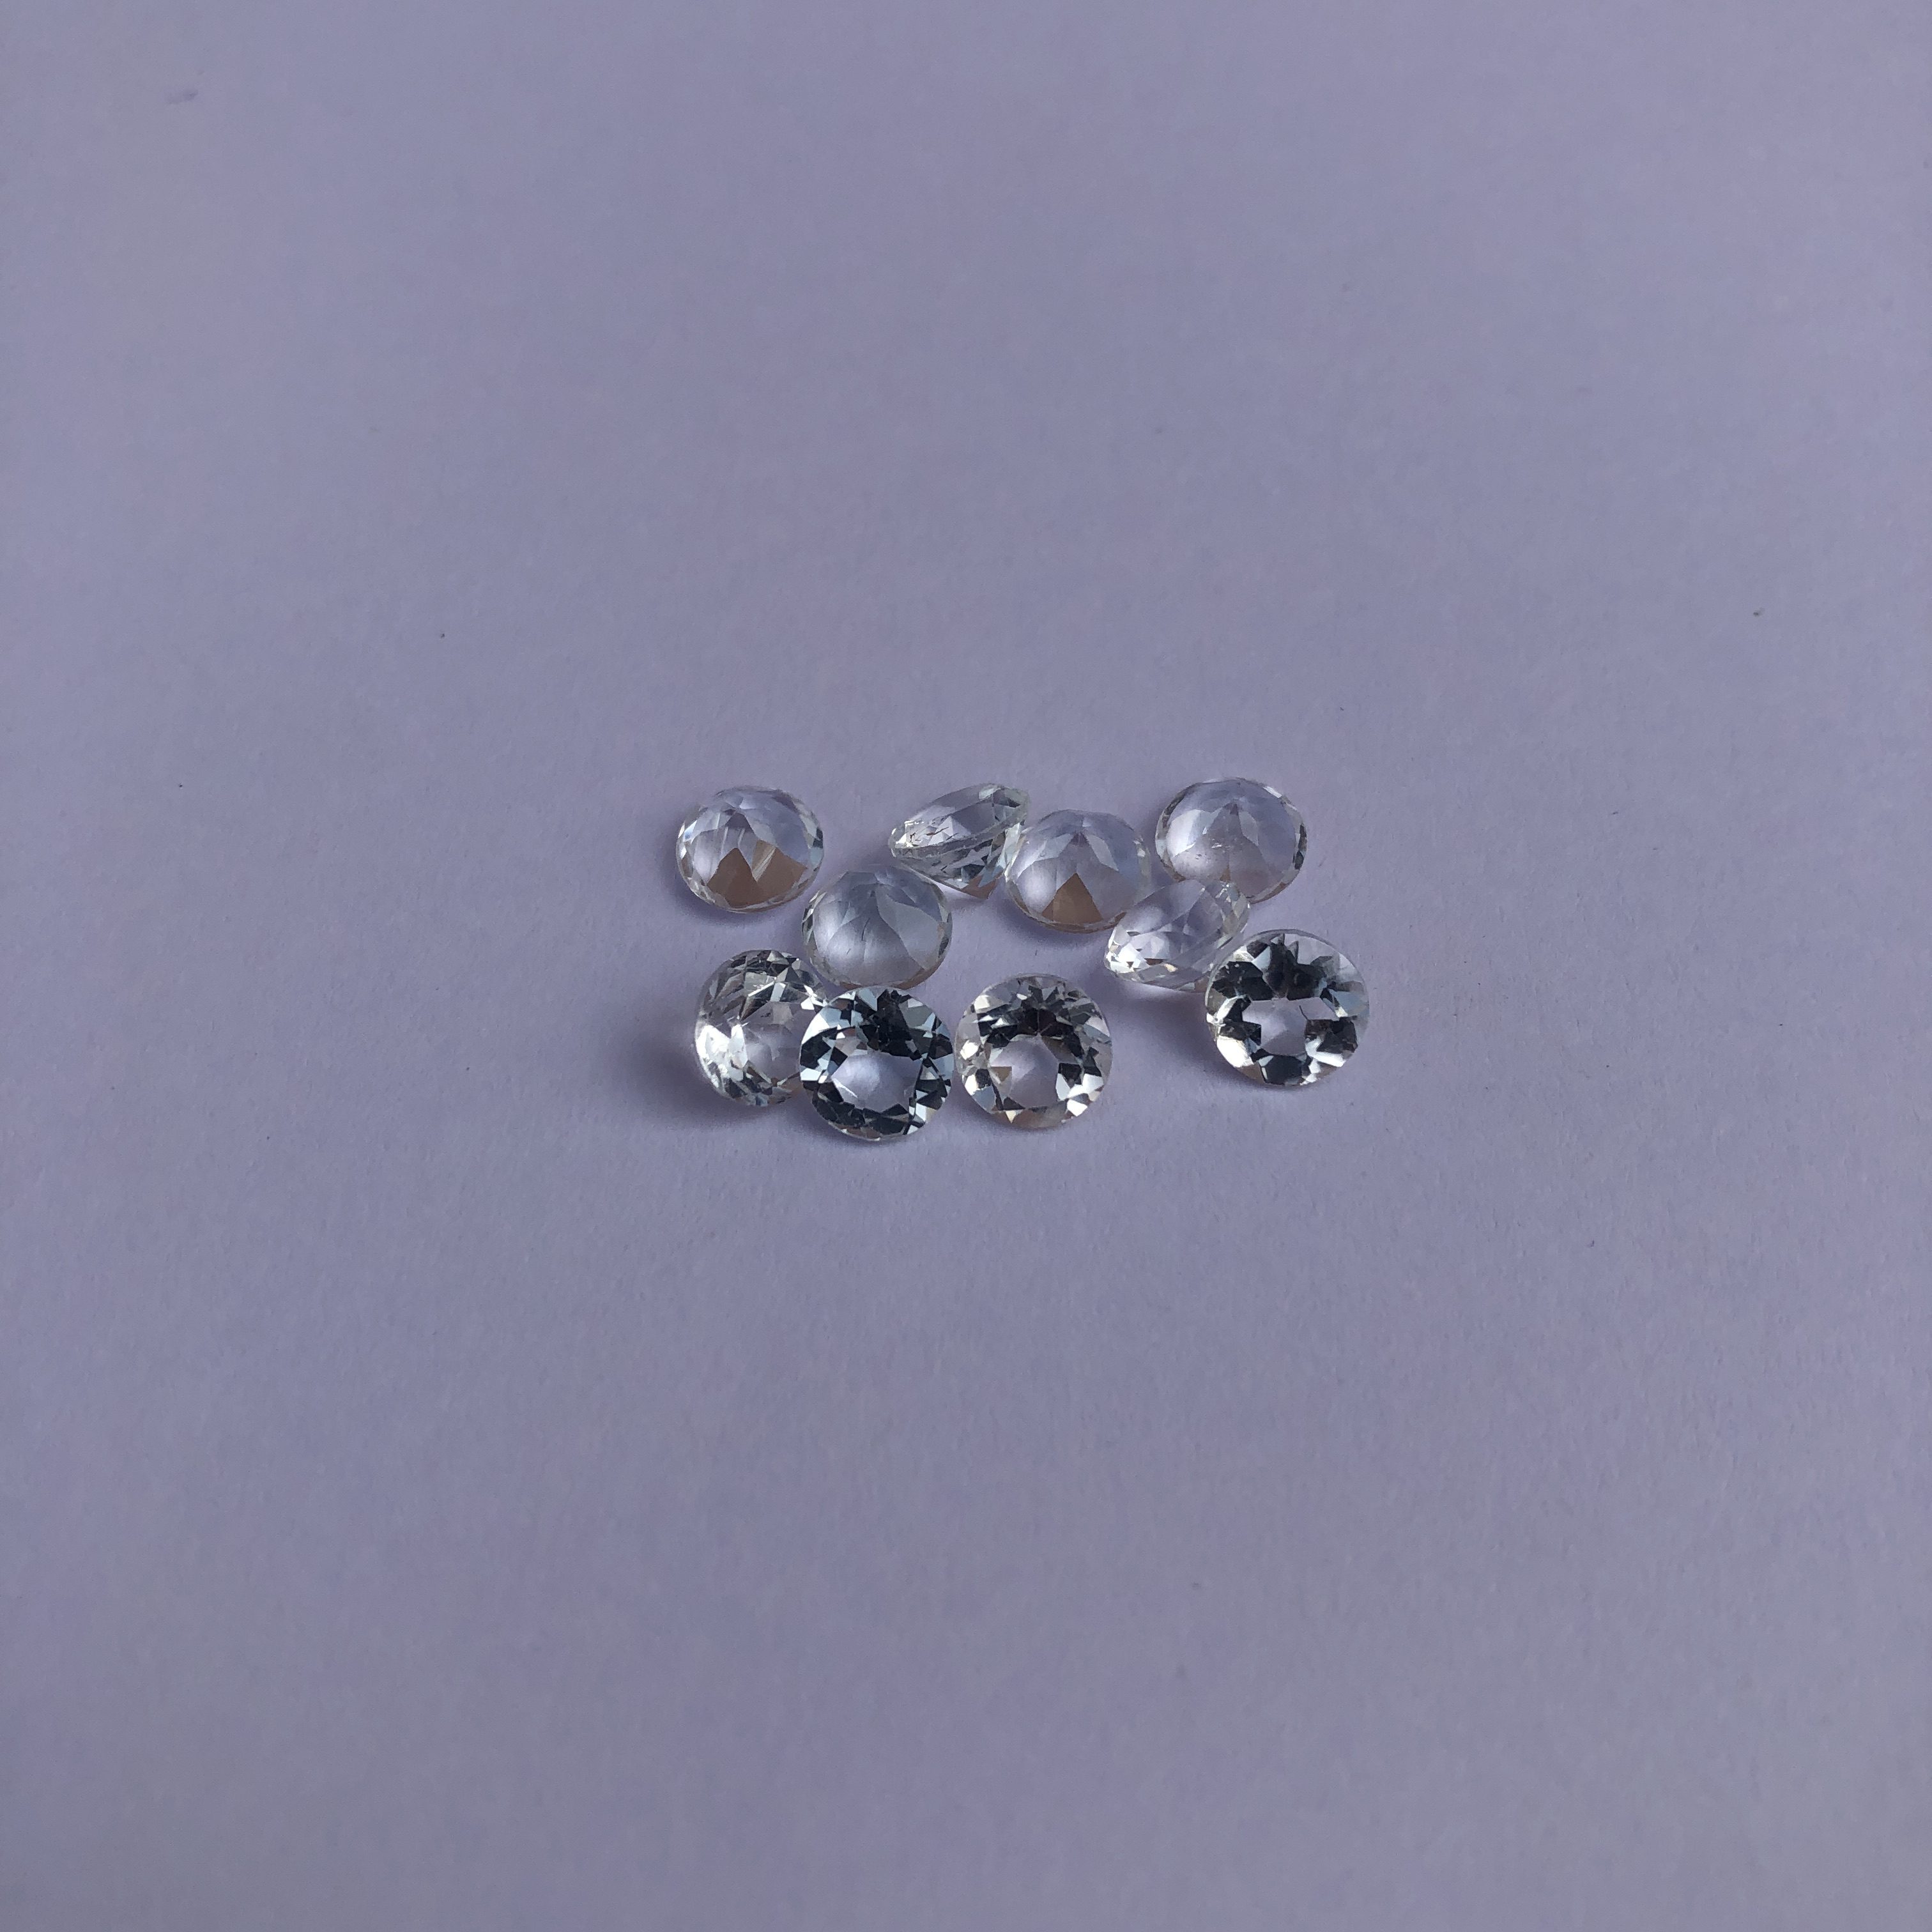 6mm Natural Crystal Quartz Round Cut Gemstone | Get FREE SHIPPING